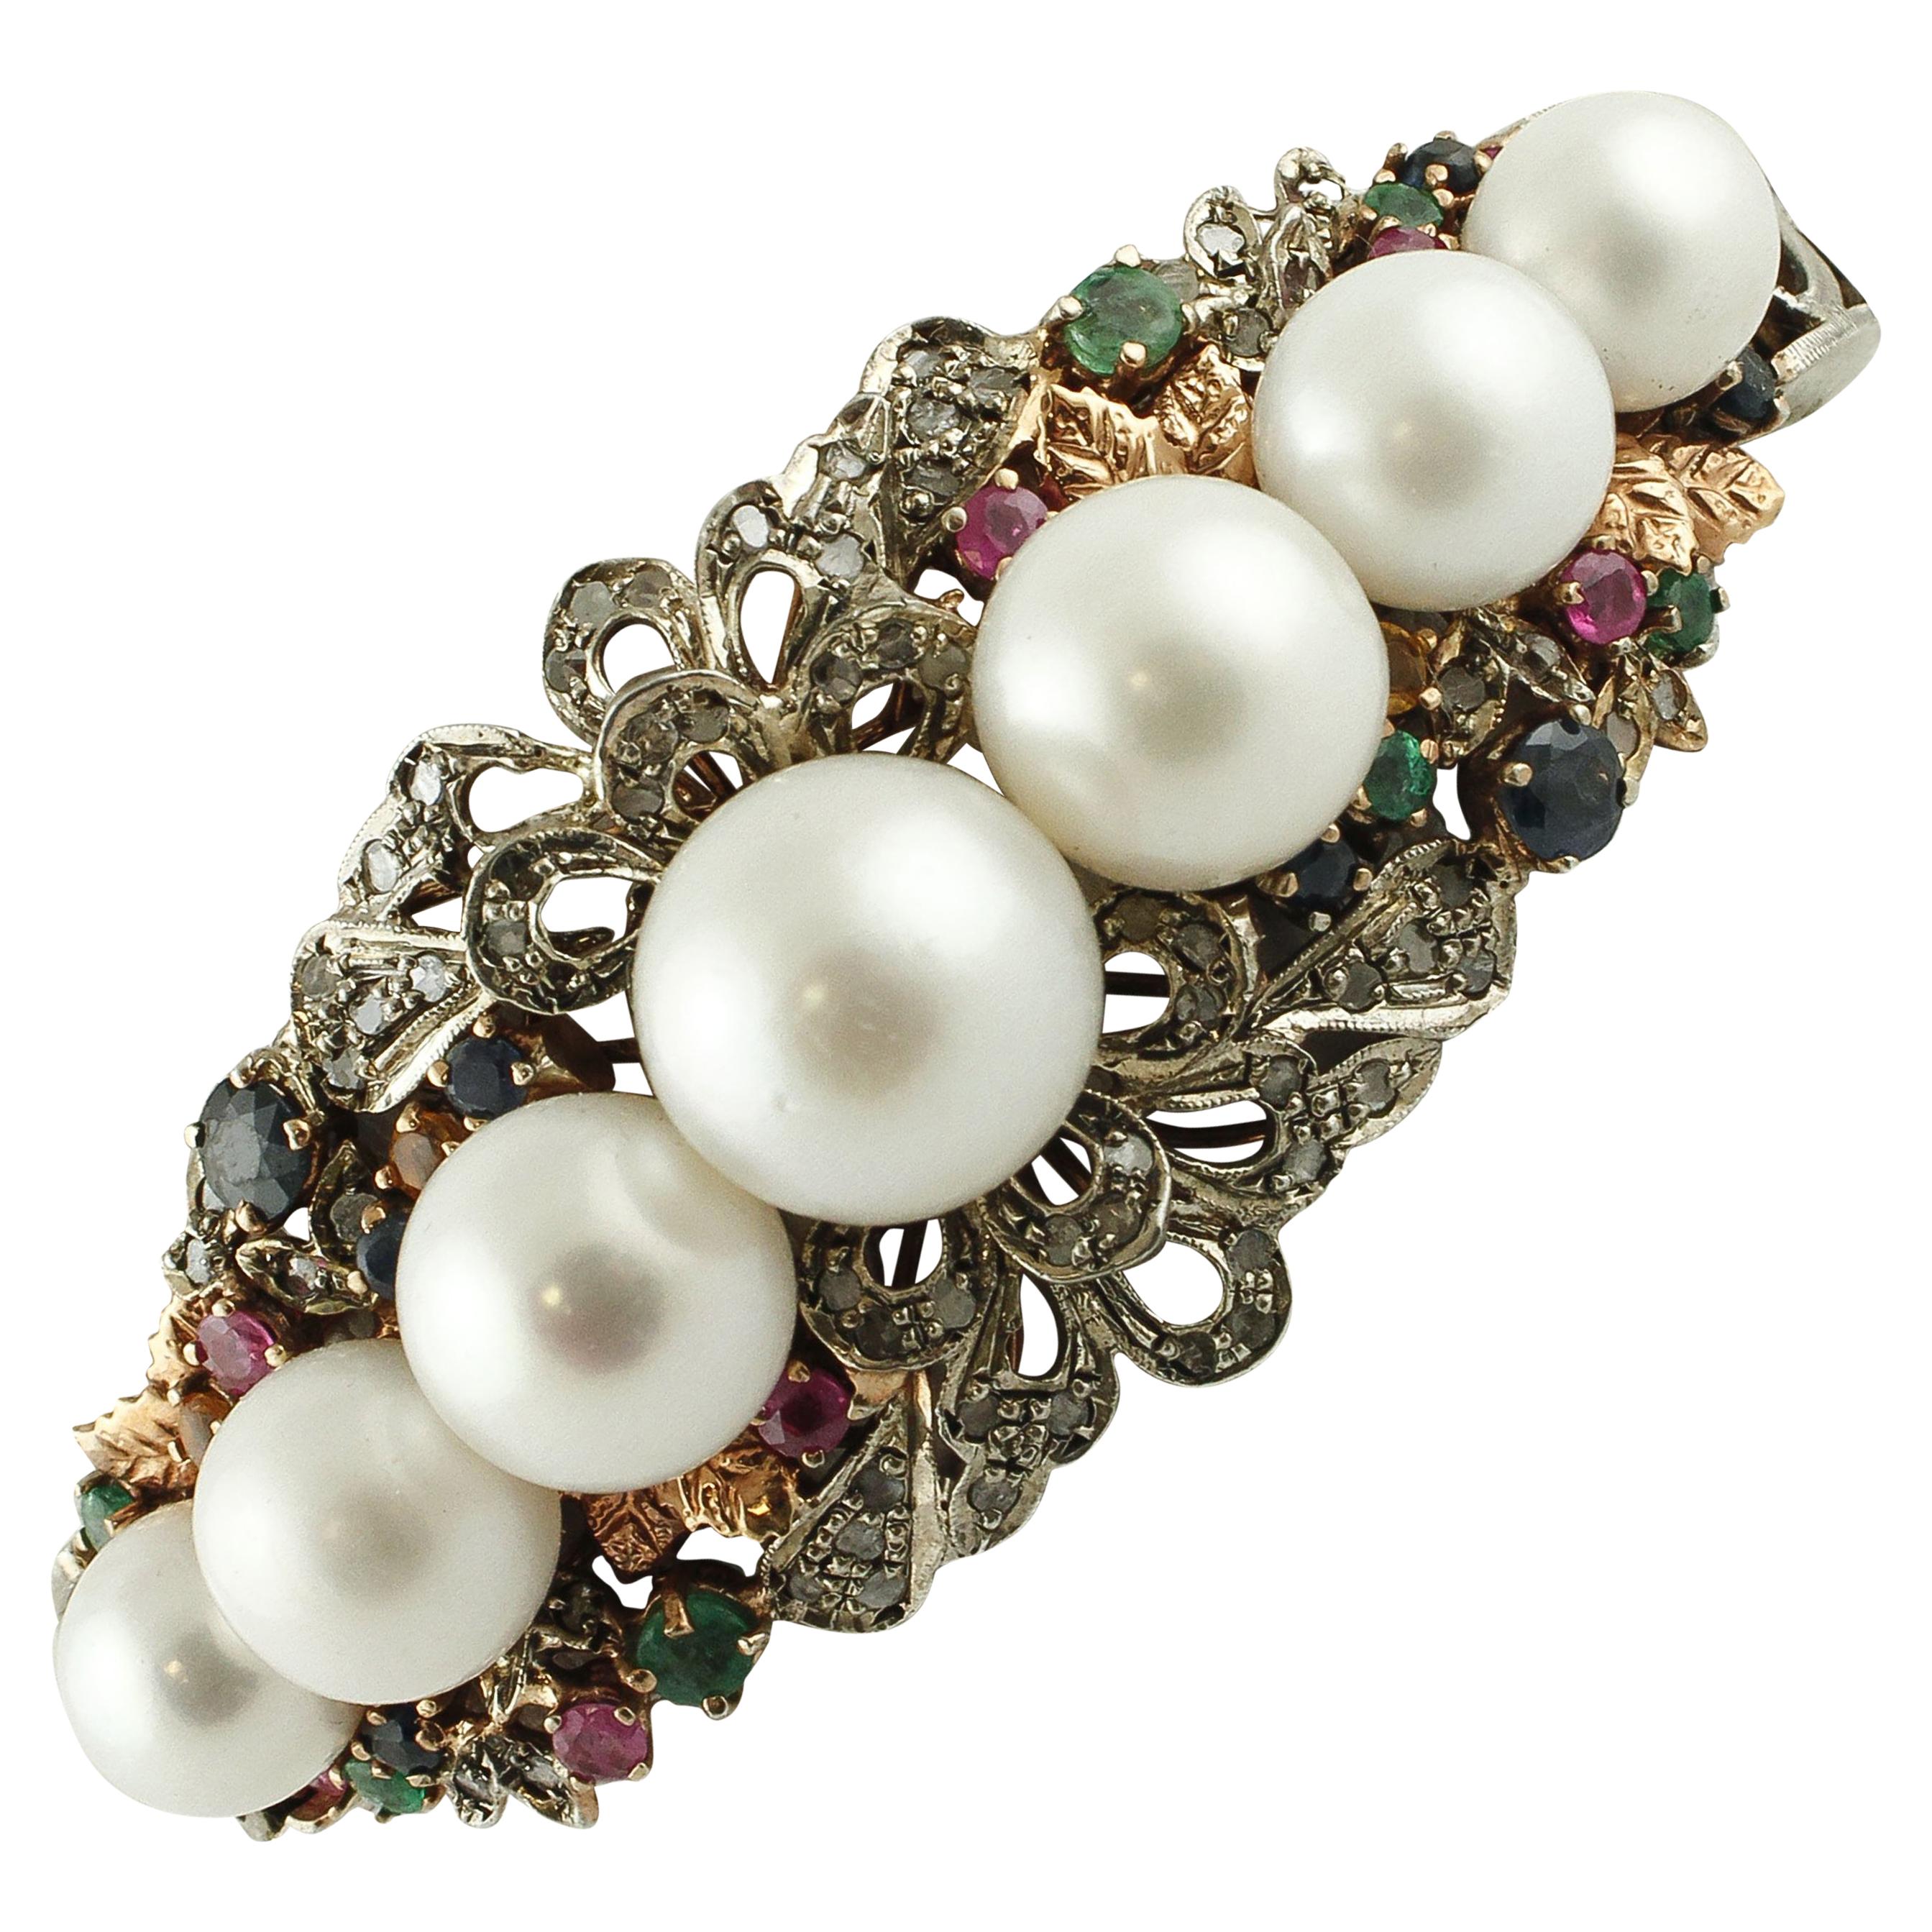 Bracelet rigide en or rose et argent avec diamants, rubis, meraudes, saphirs et perles